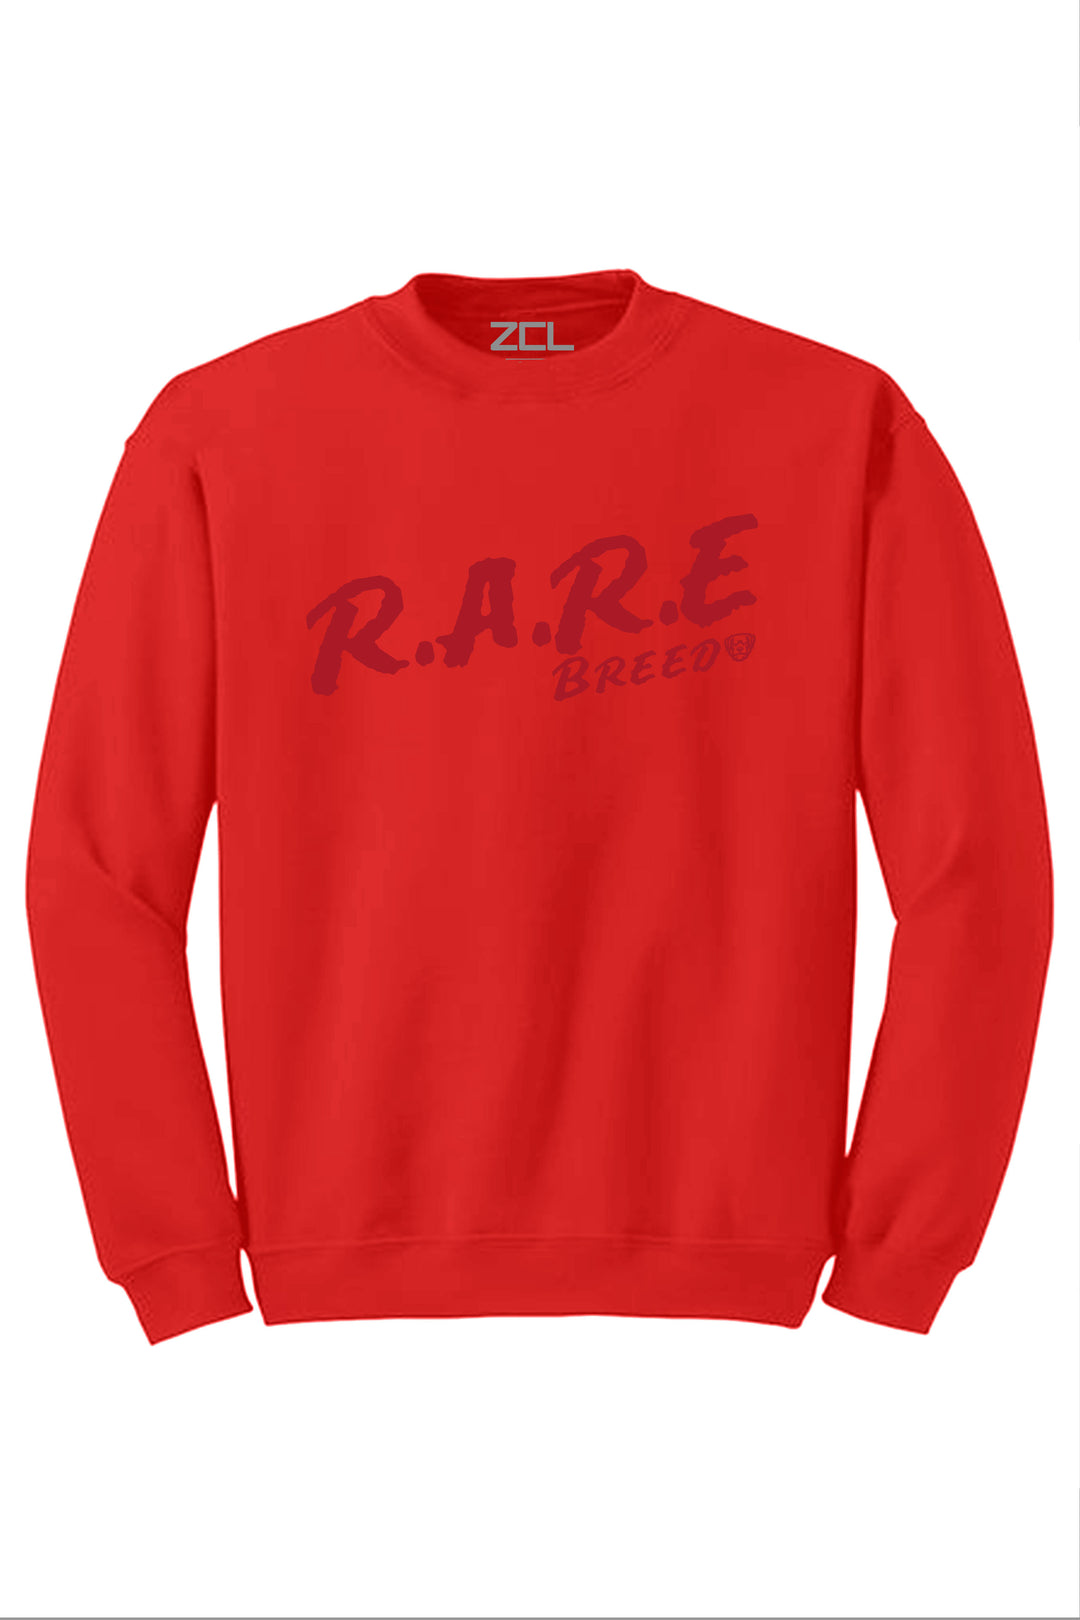 Rare Breed Crewneck Sweatshirt (Red Logo) - Zamage